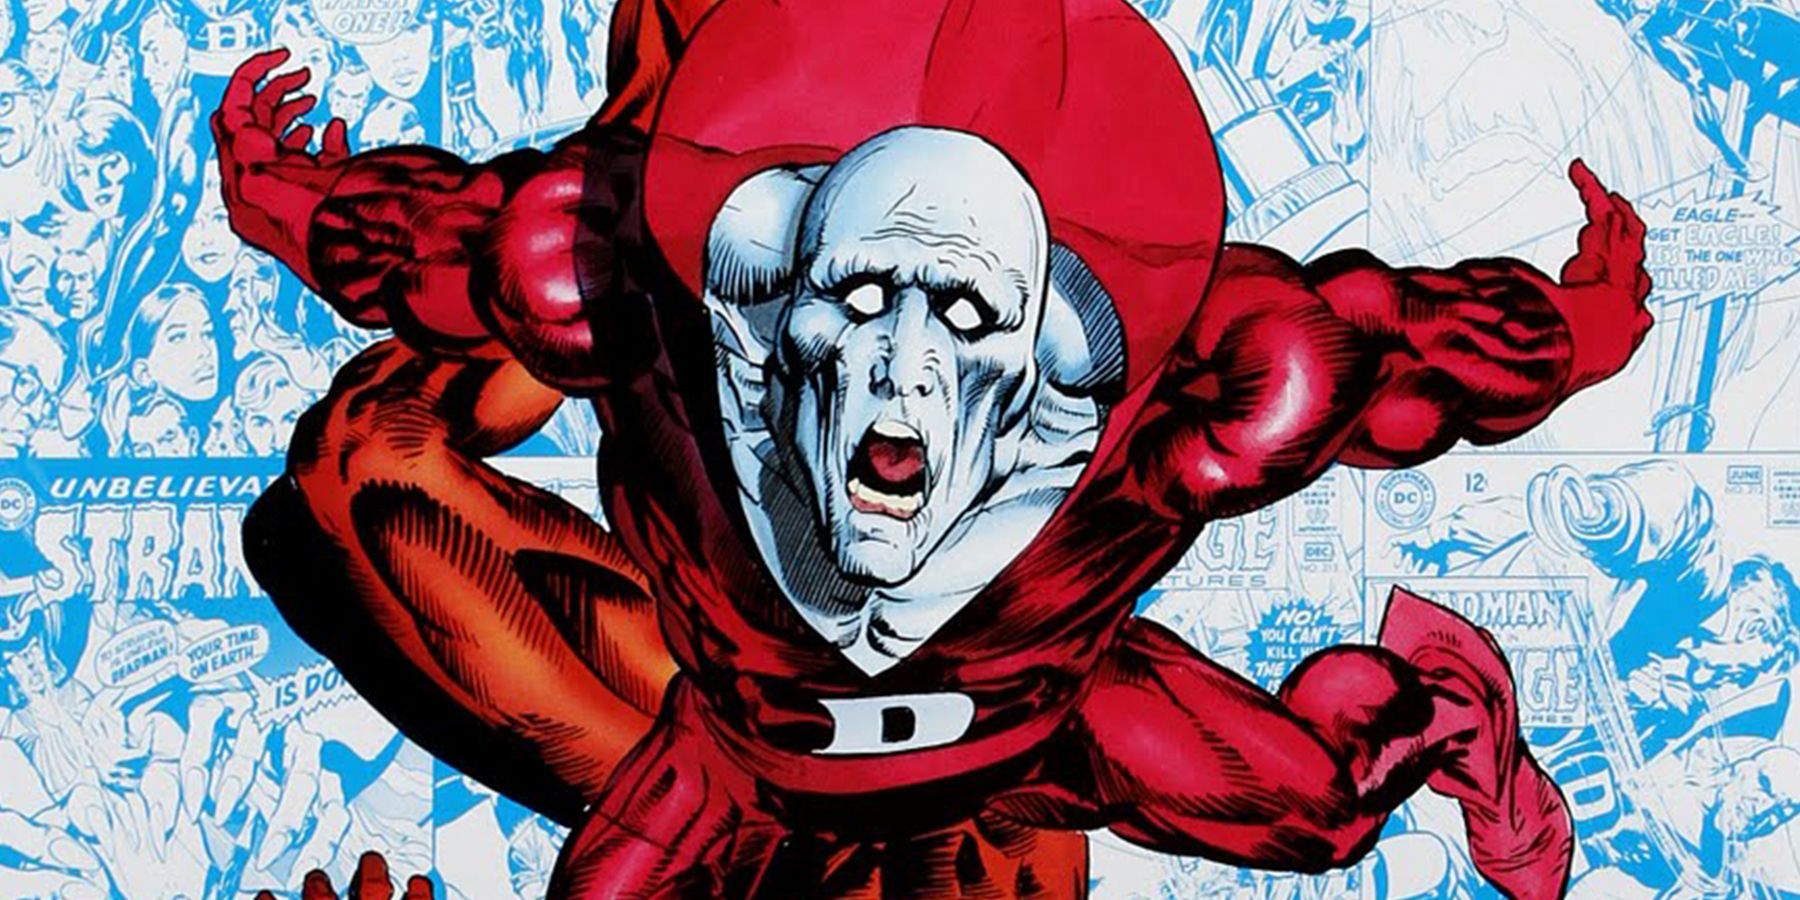 Deadman screams in terror from DC Comics 